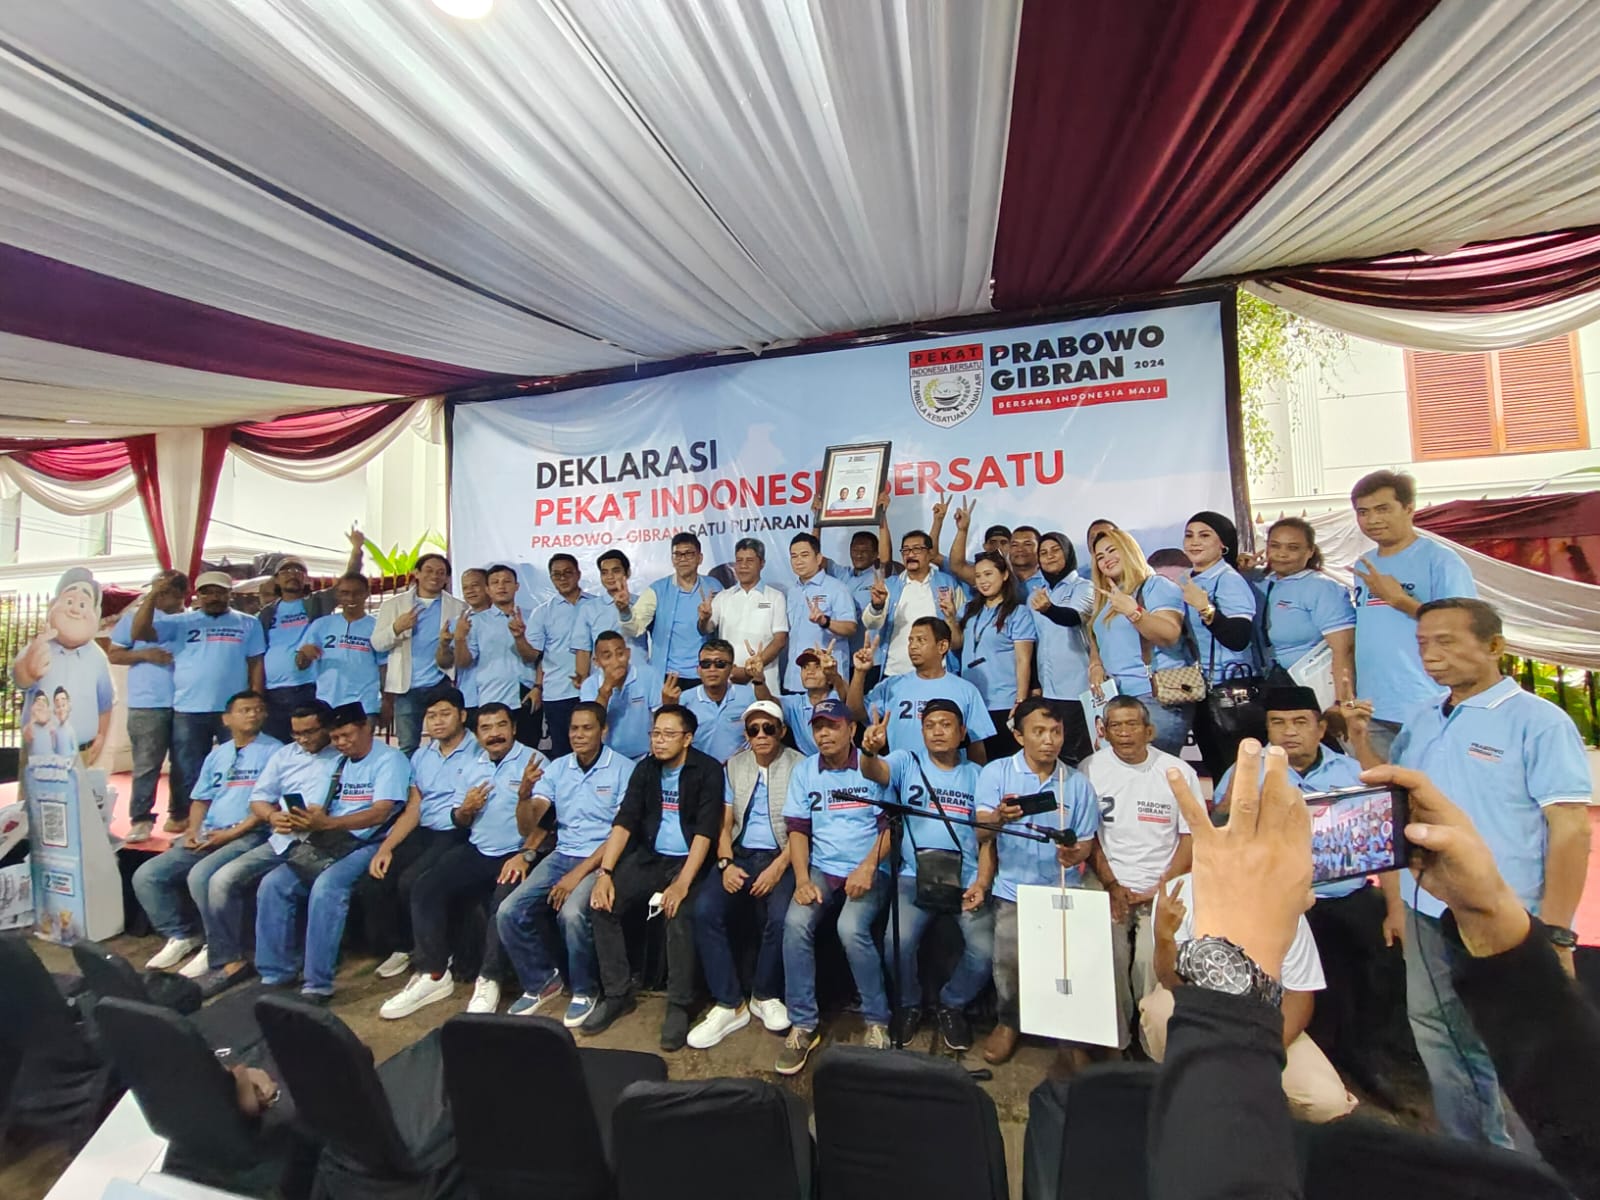 Relawan PEKAT Indonesia Bersatu (Sinpo.id/Tim Media)